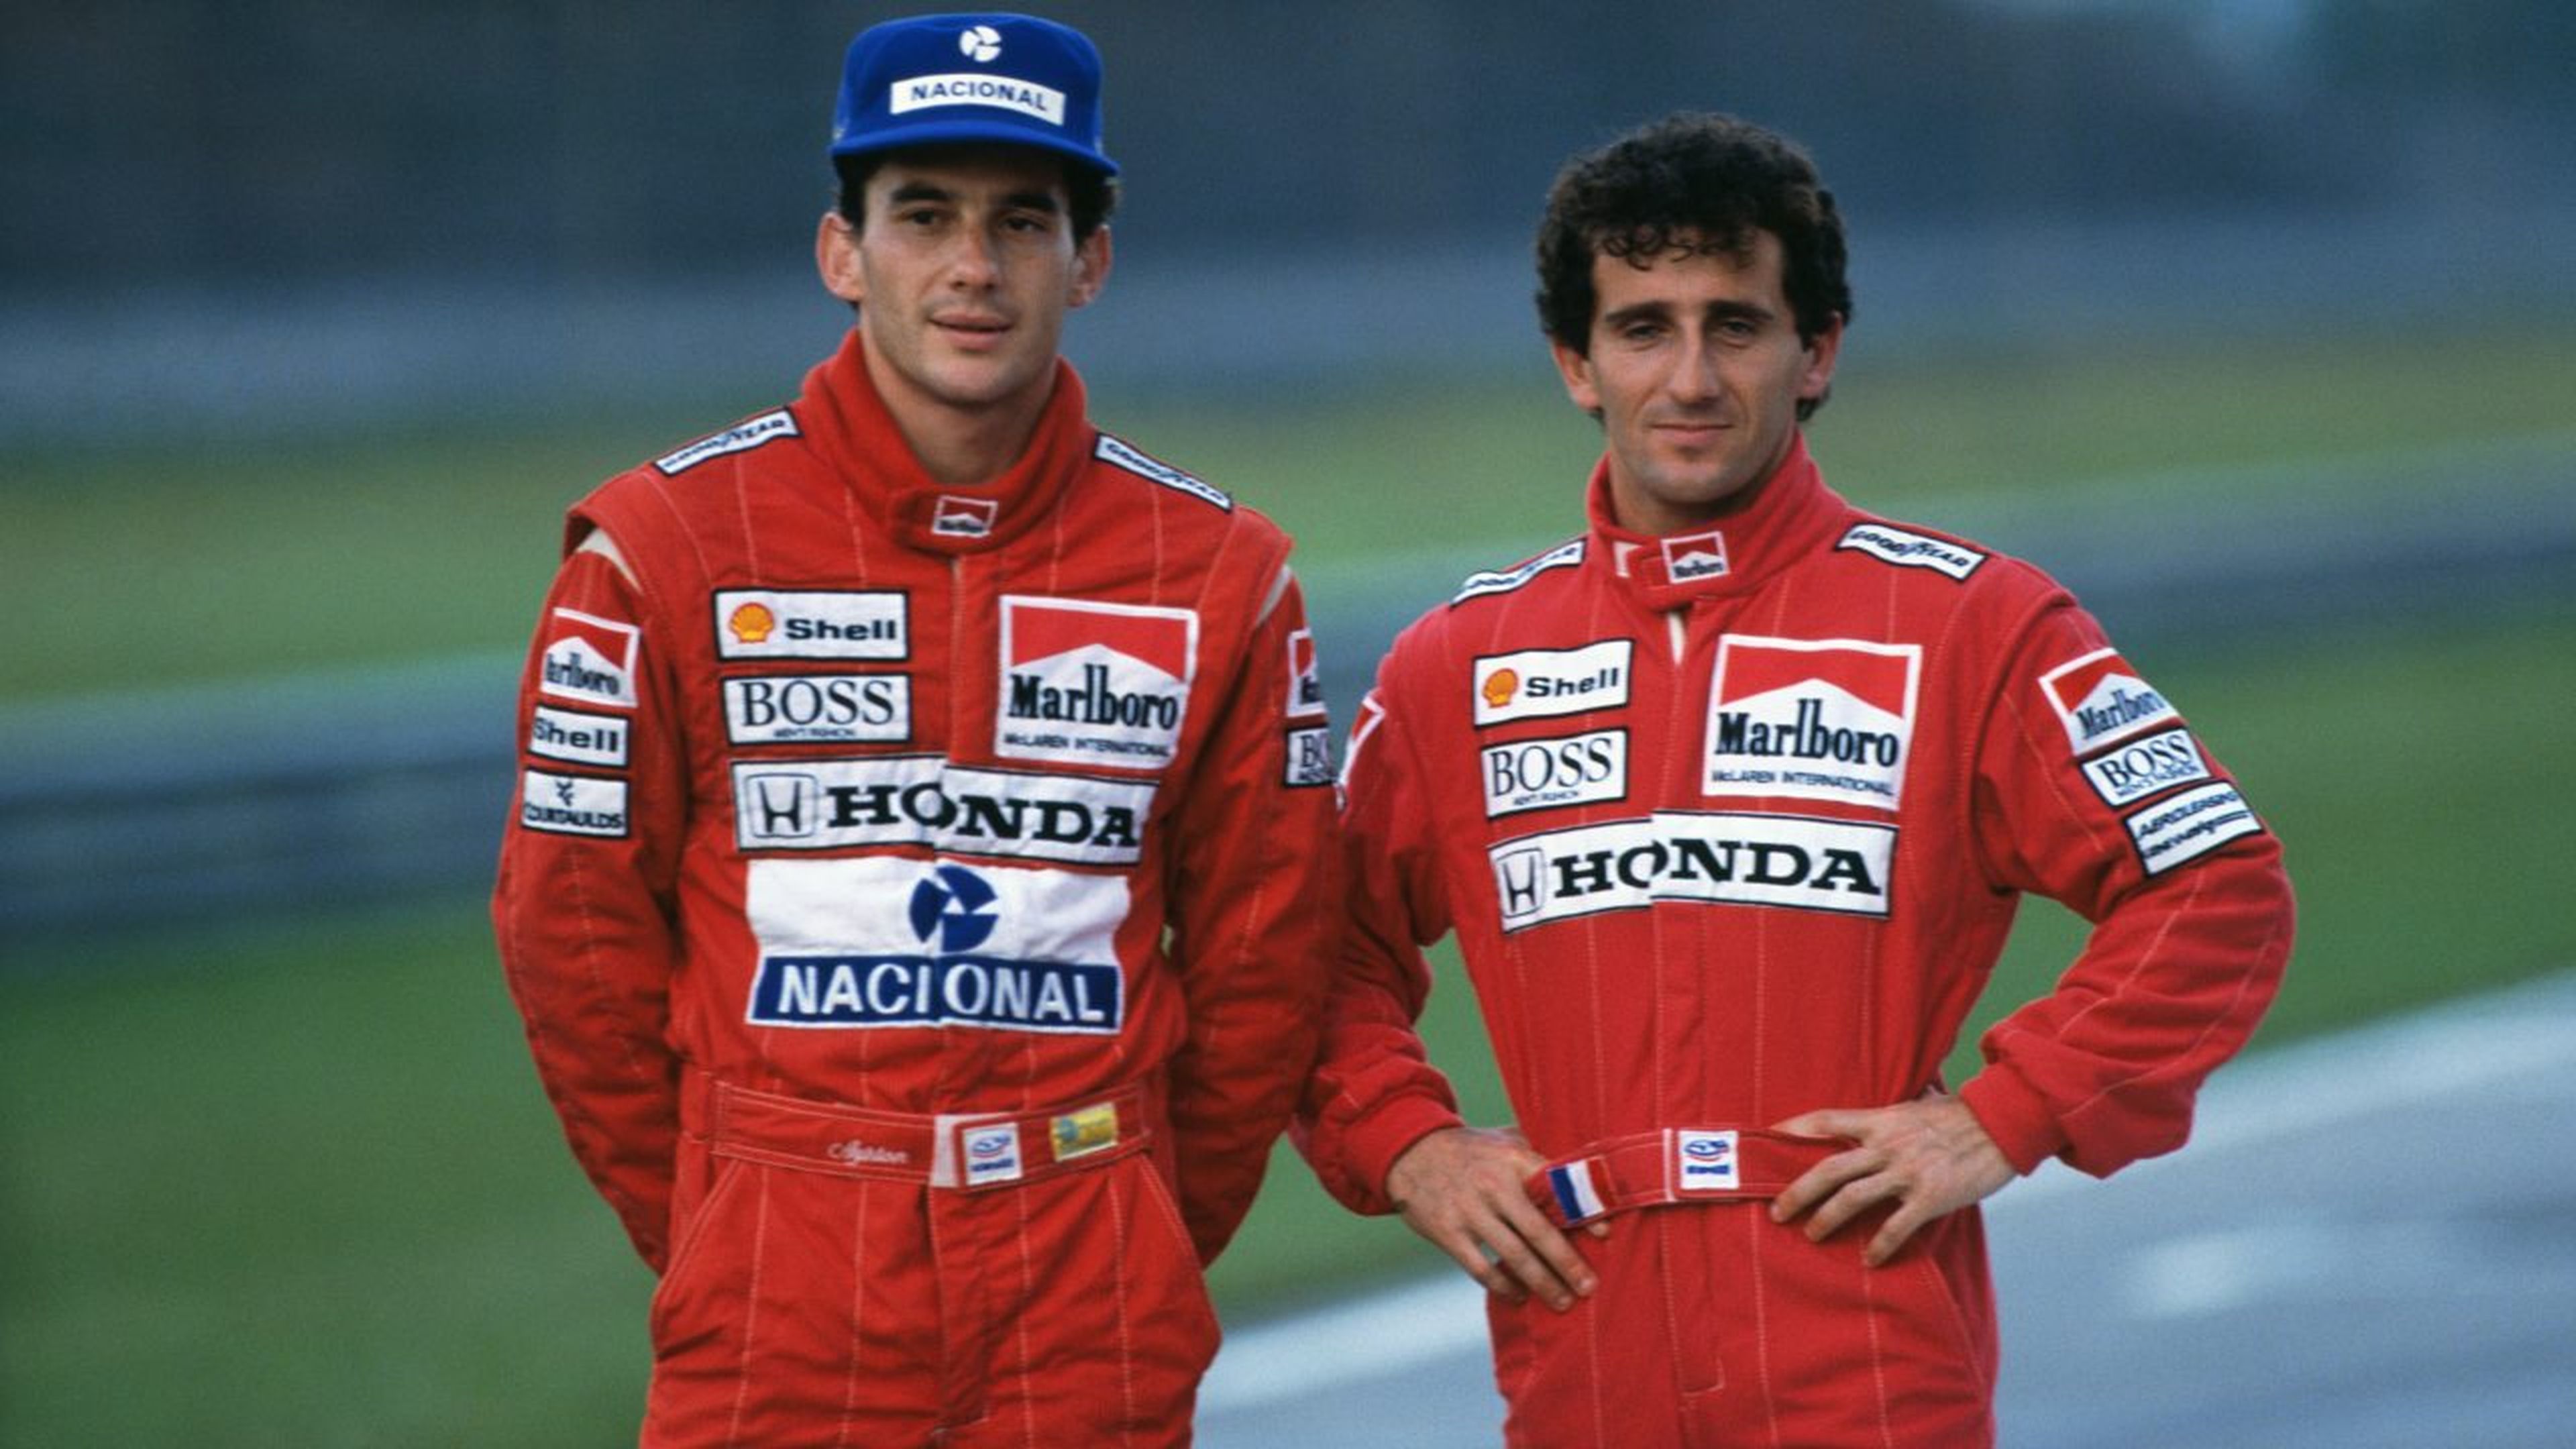 Ayrton Senna o Alain Prost, ¿quién era mejor?